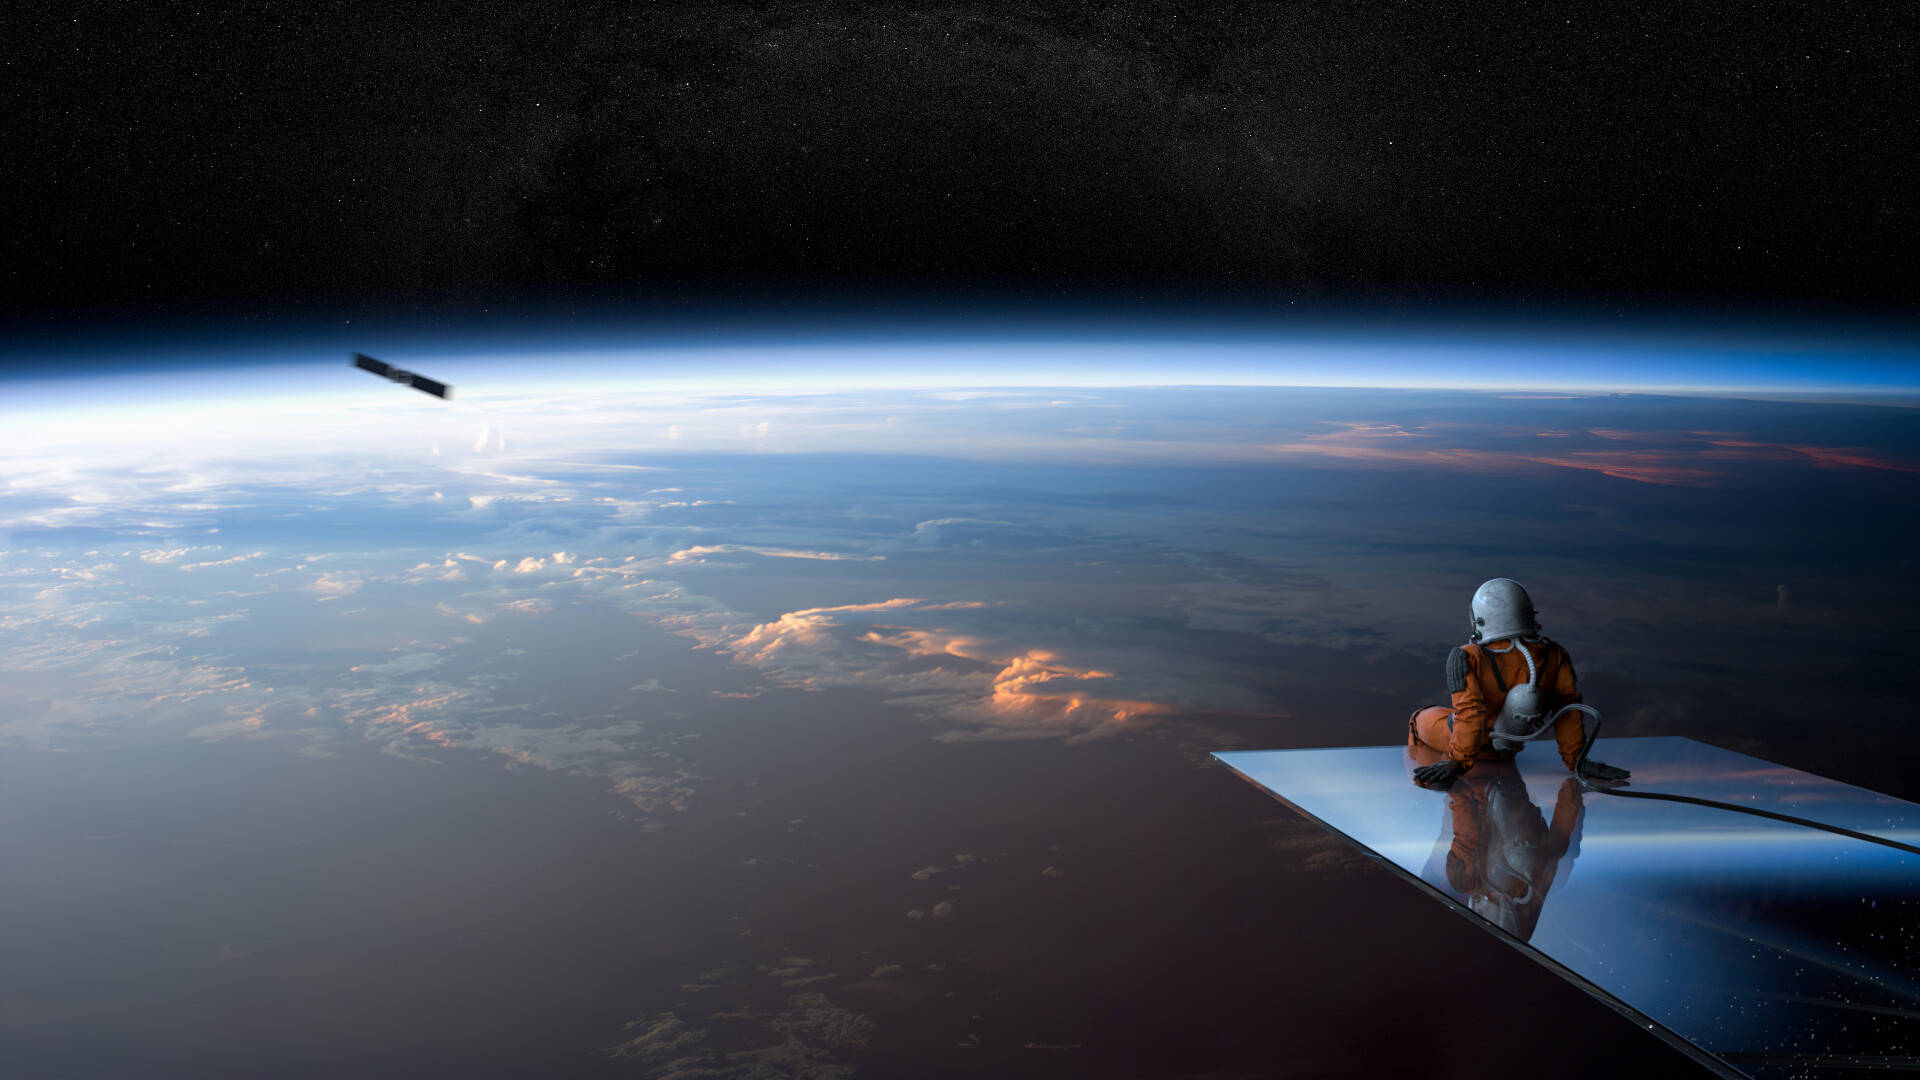 En astronaut i rummet hviler over en planet med ringe. Wallpaper